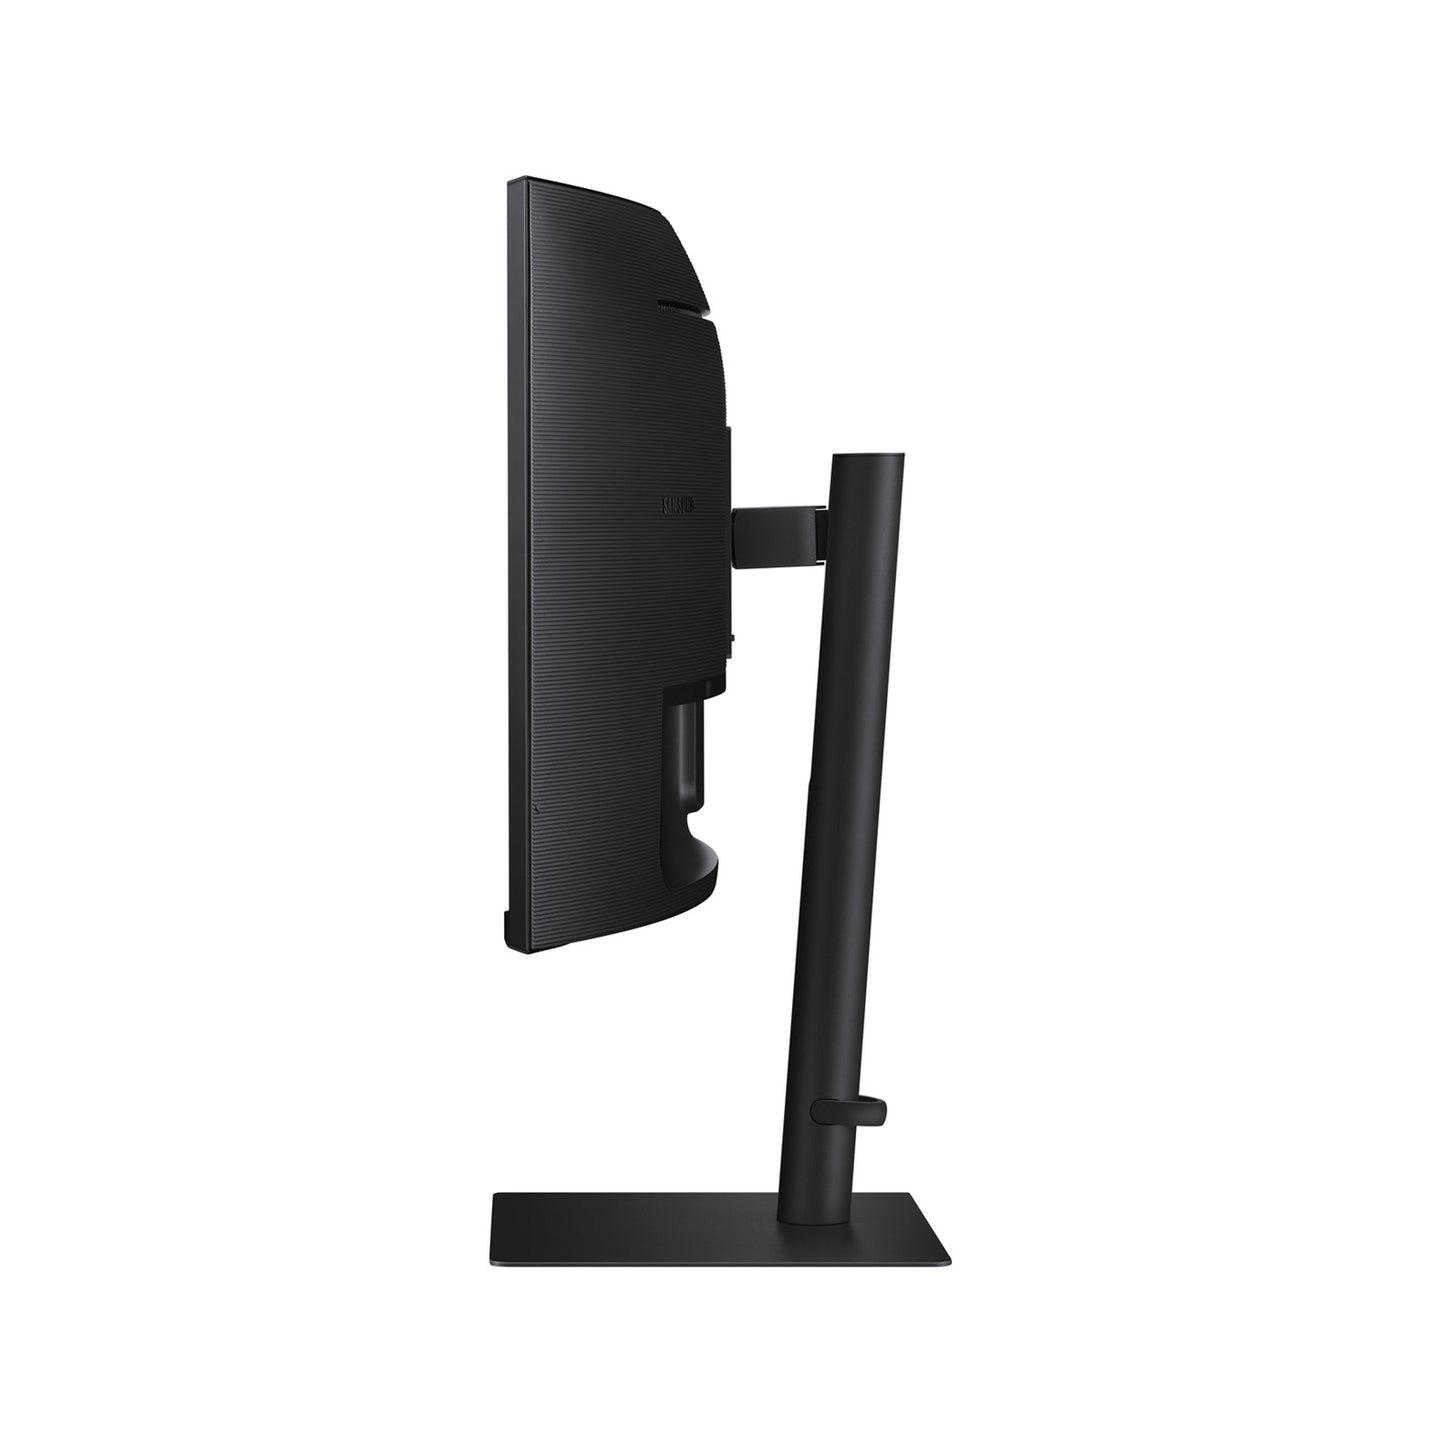 Samsung 34-inch display met Webcam / 3440 x 1440 UWQHD / Curved / USB-C / HDMI / DP / USB 3.0/USB-C Hub / 90W